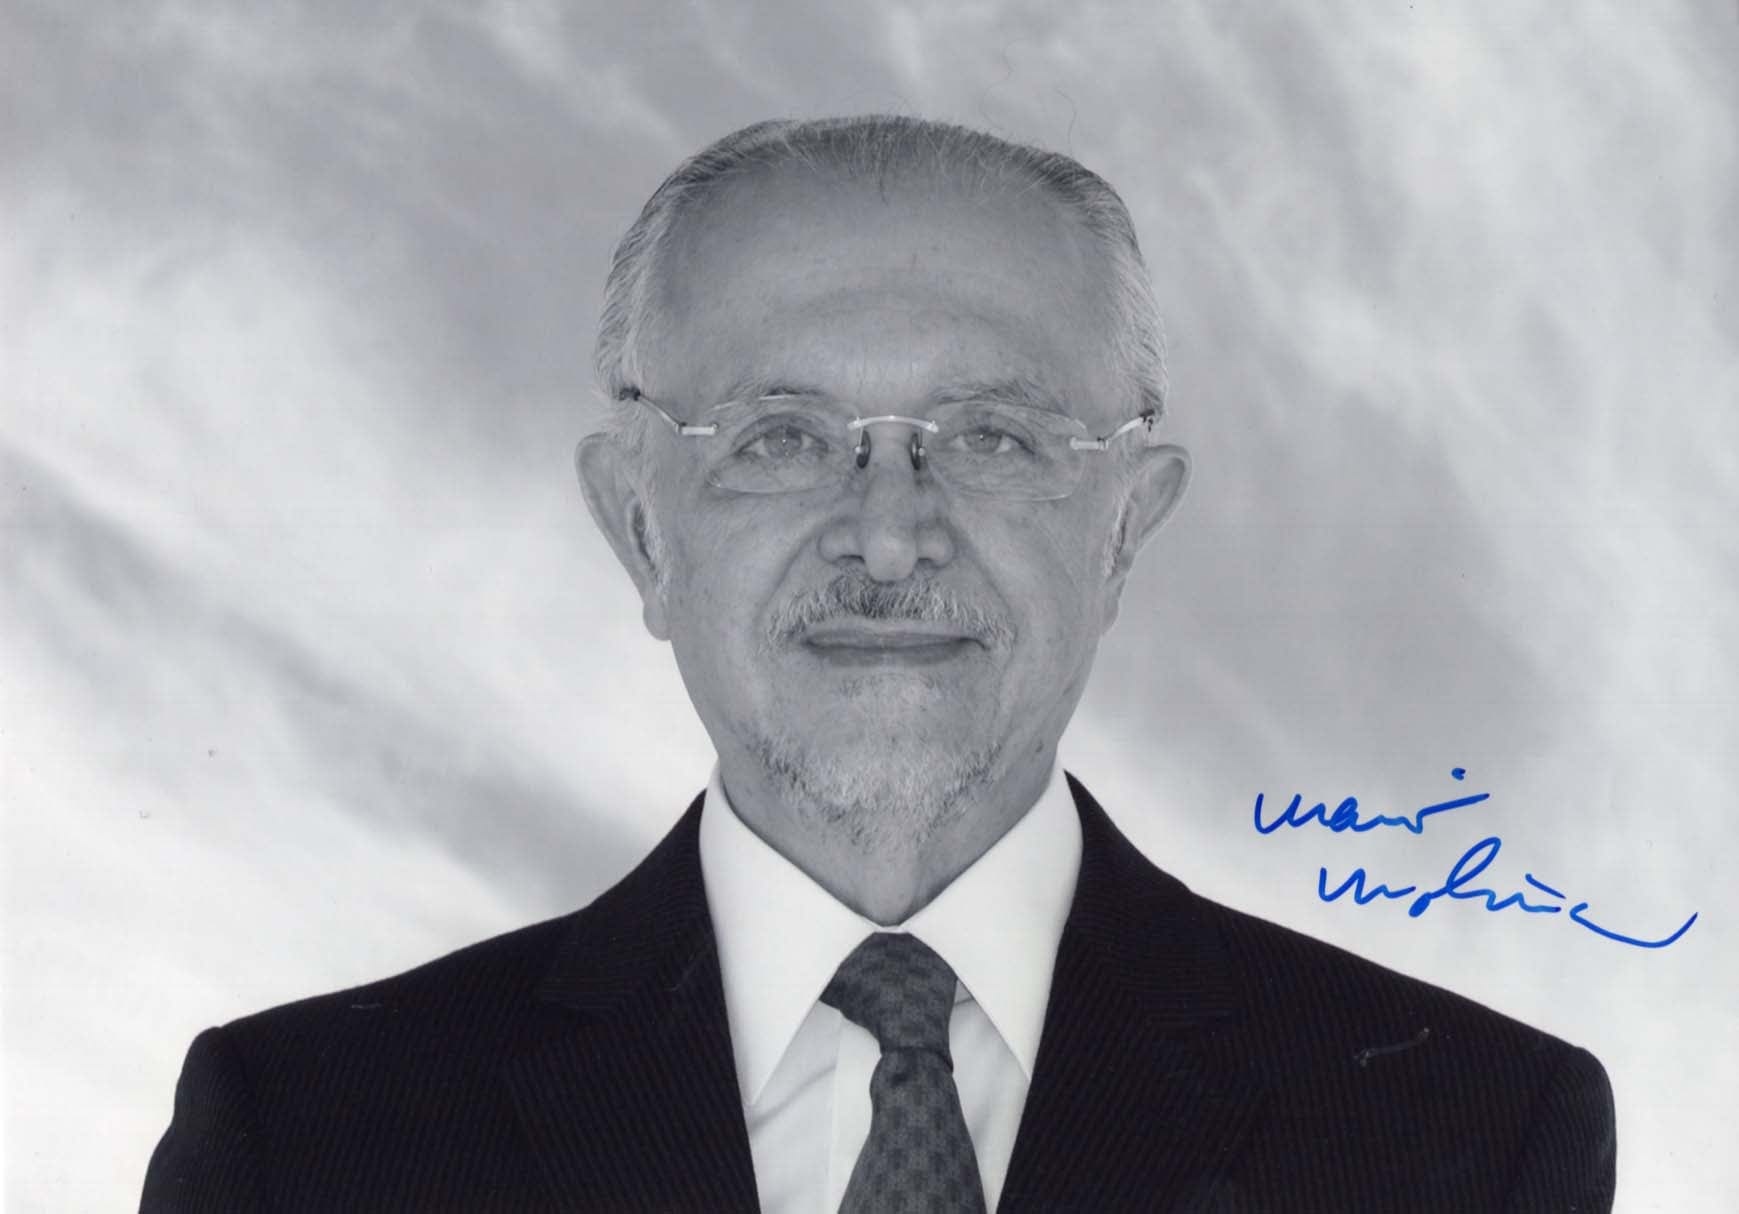 Mario Molina Autograph Autogramm | ID 8073315549333